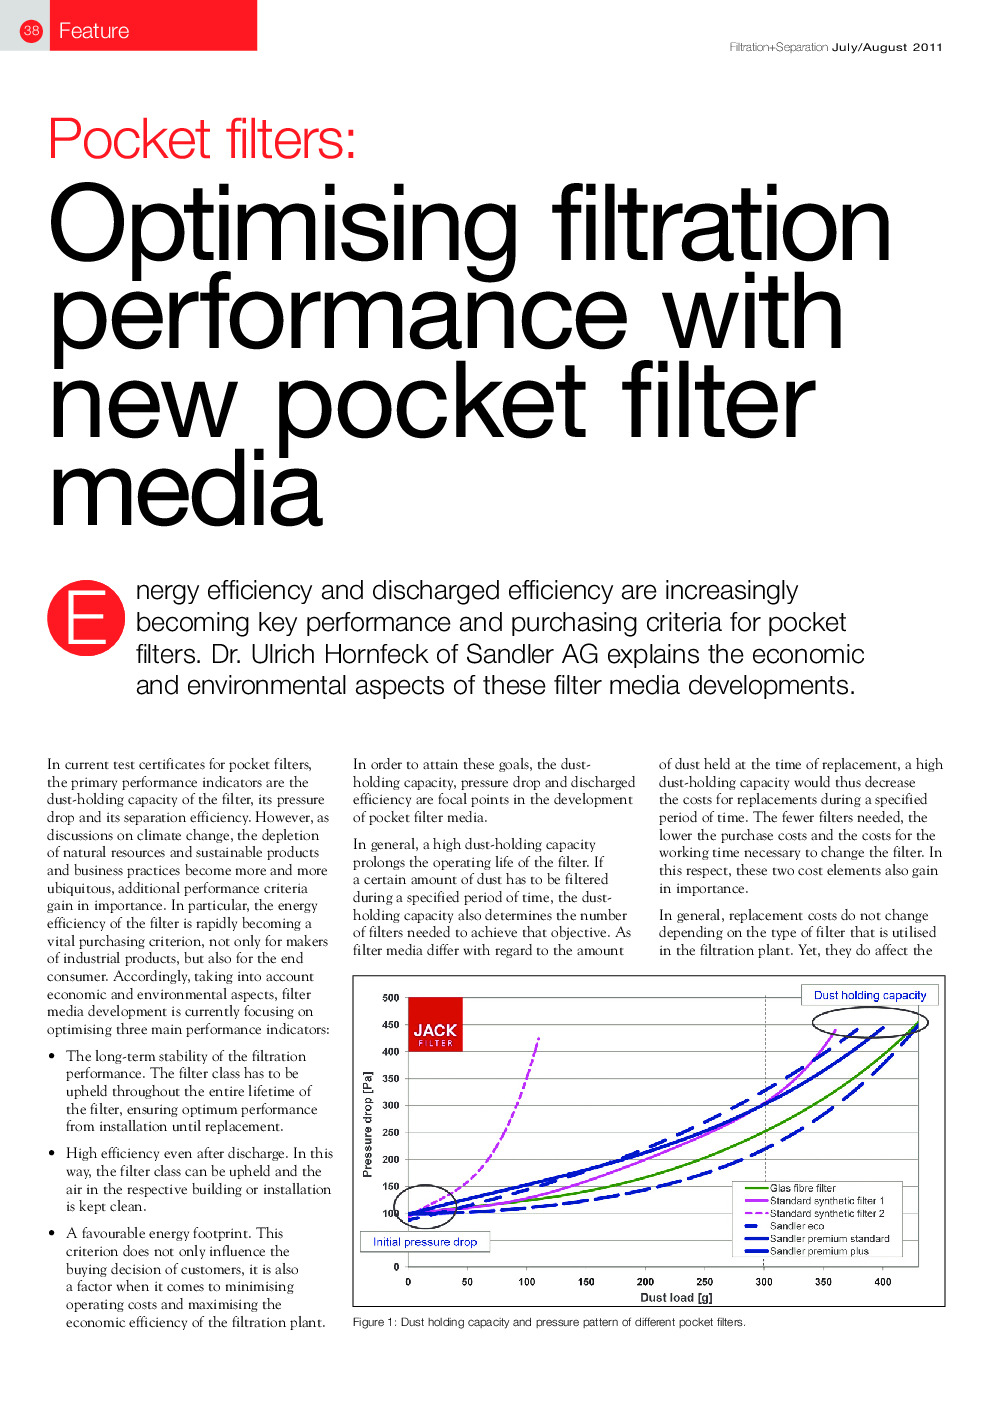 Pocket filters: Optimising filtration performance with new pocket filter media